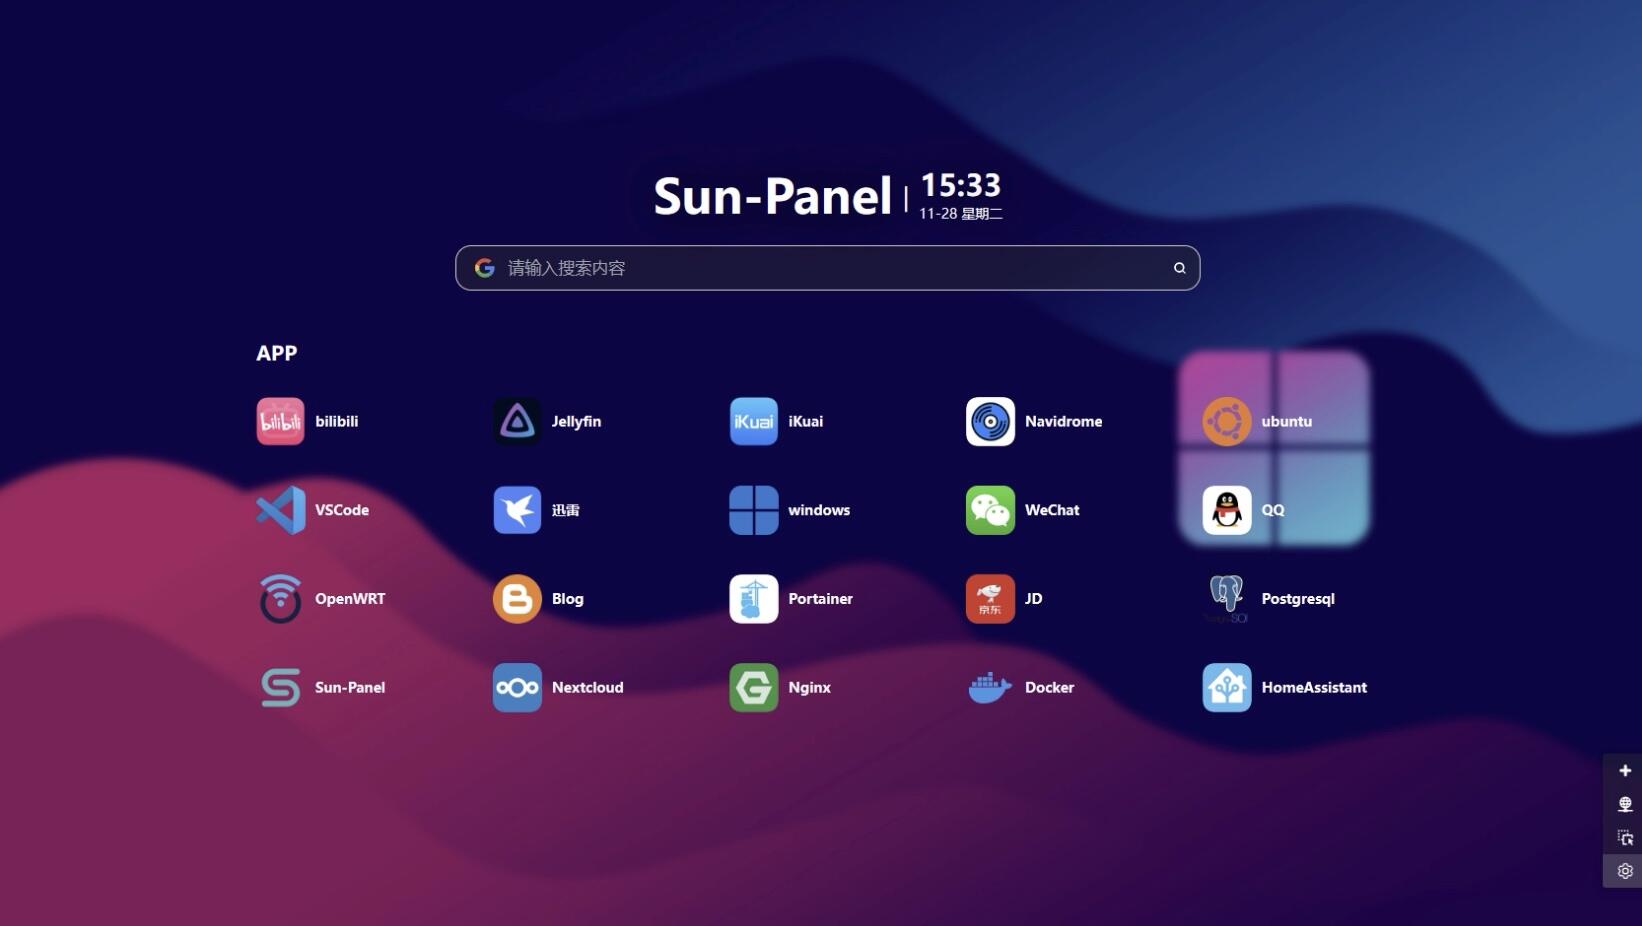 Sun-Panel